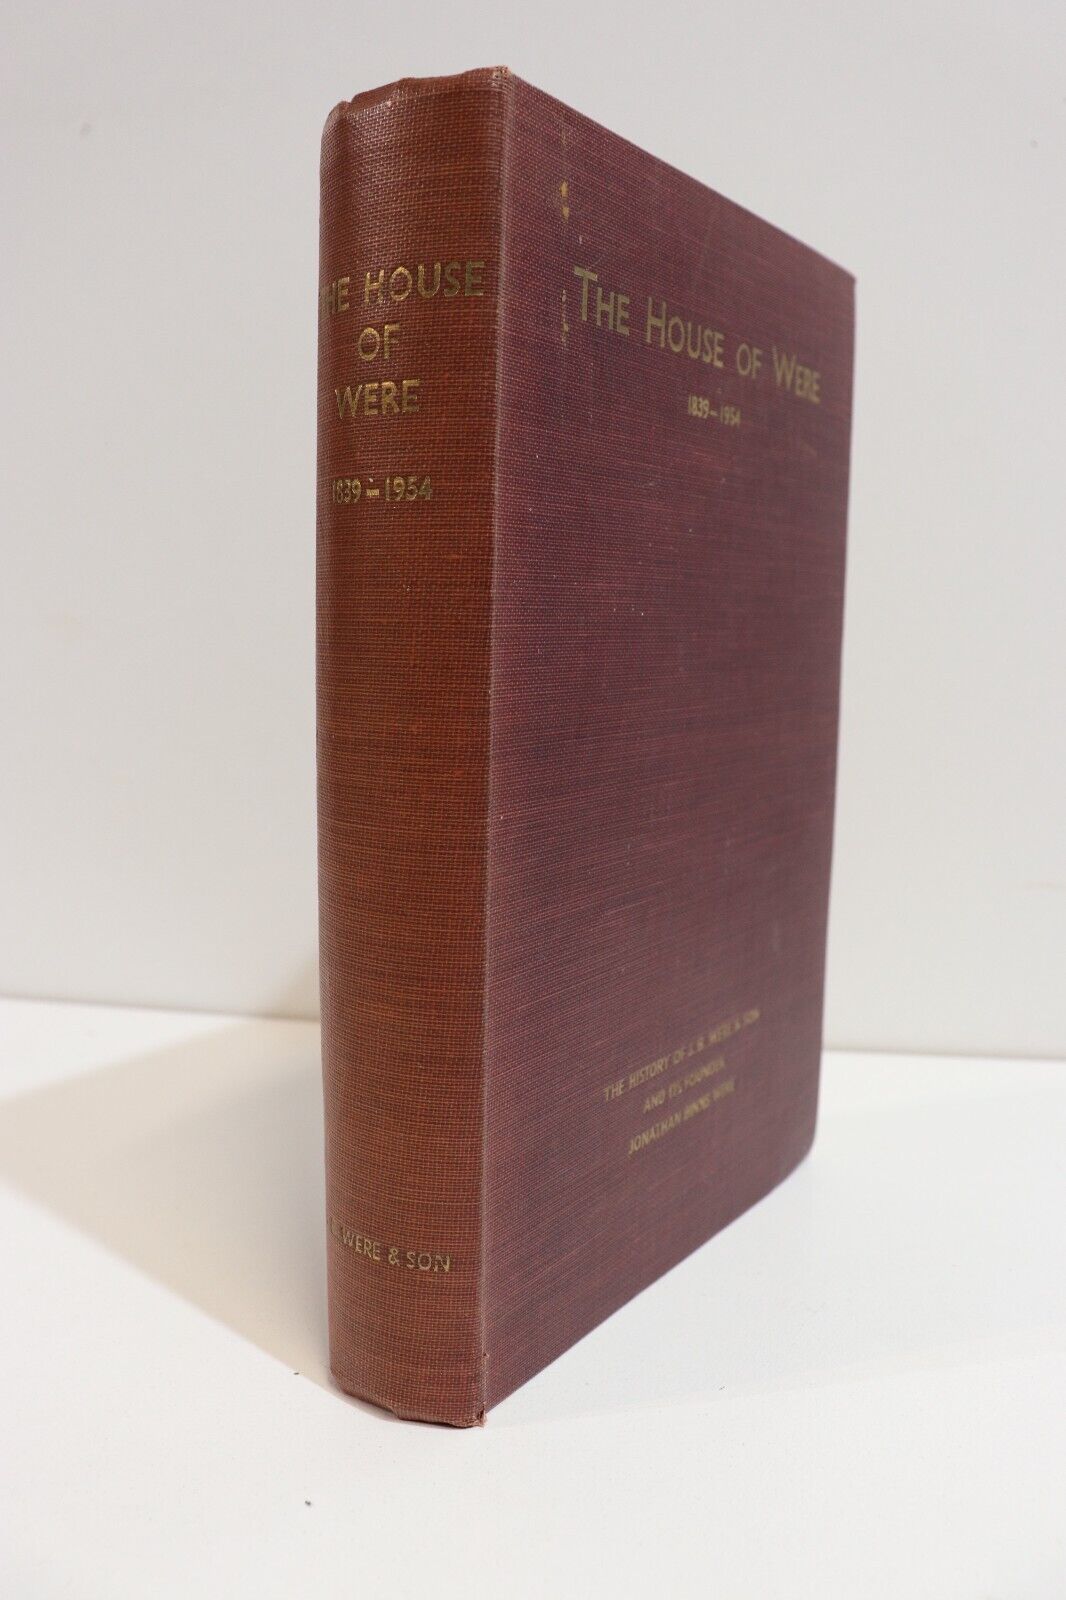 The History Of J.B. Were & Son - 1954 - Australian Financial History Book